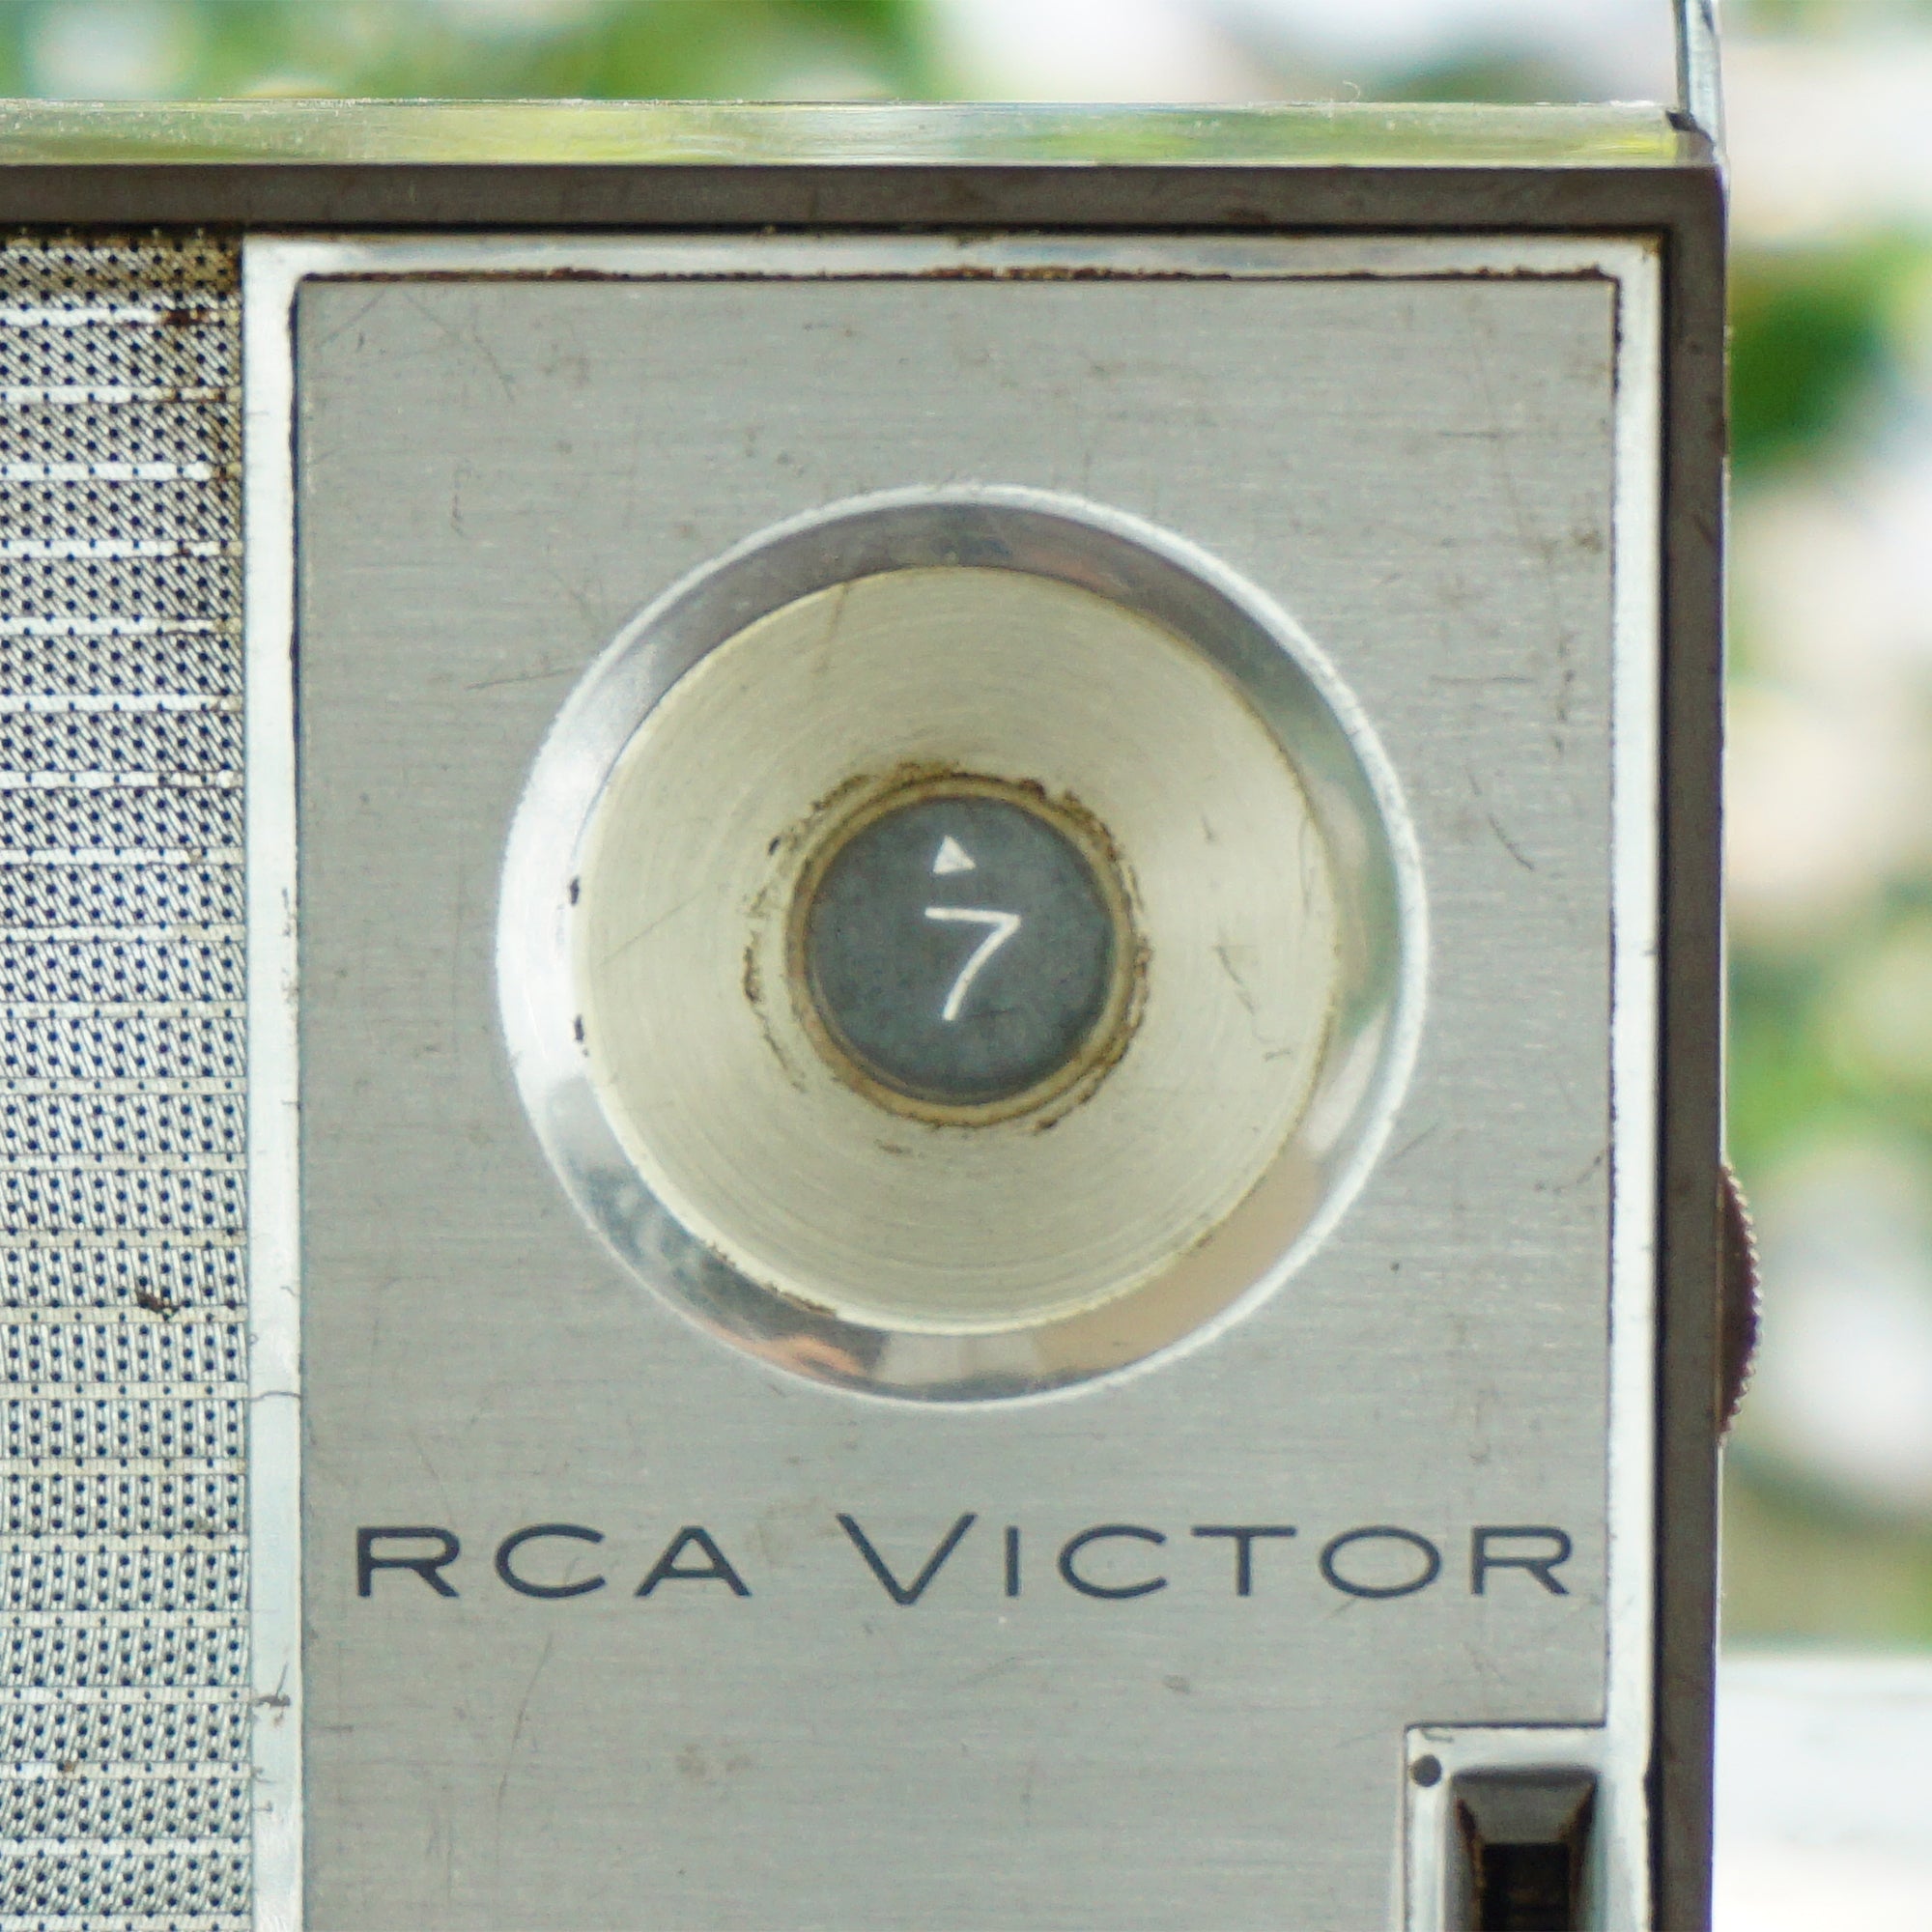 1960s Vintage RCA VICTOR Impac Transistor Radio 1-RG-46 Superheterodyne. U.S.A.